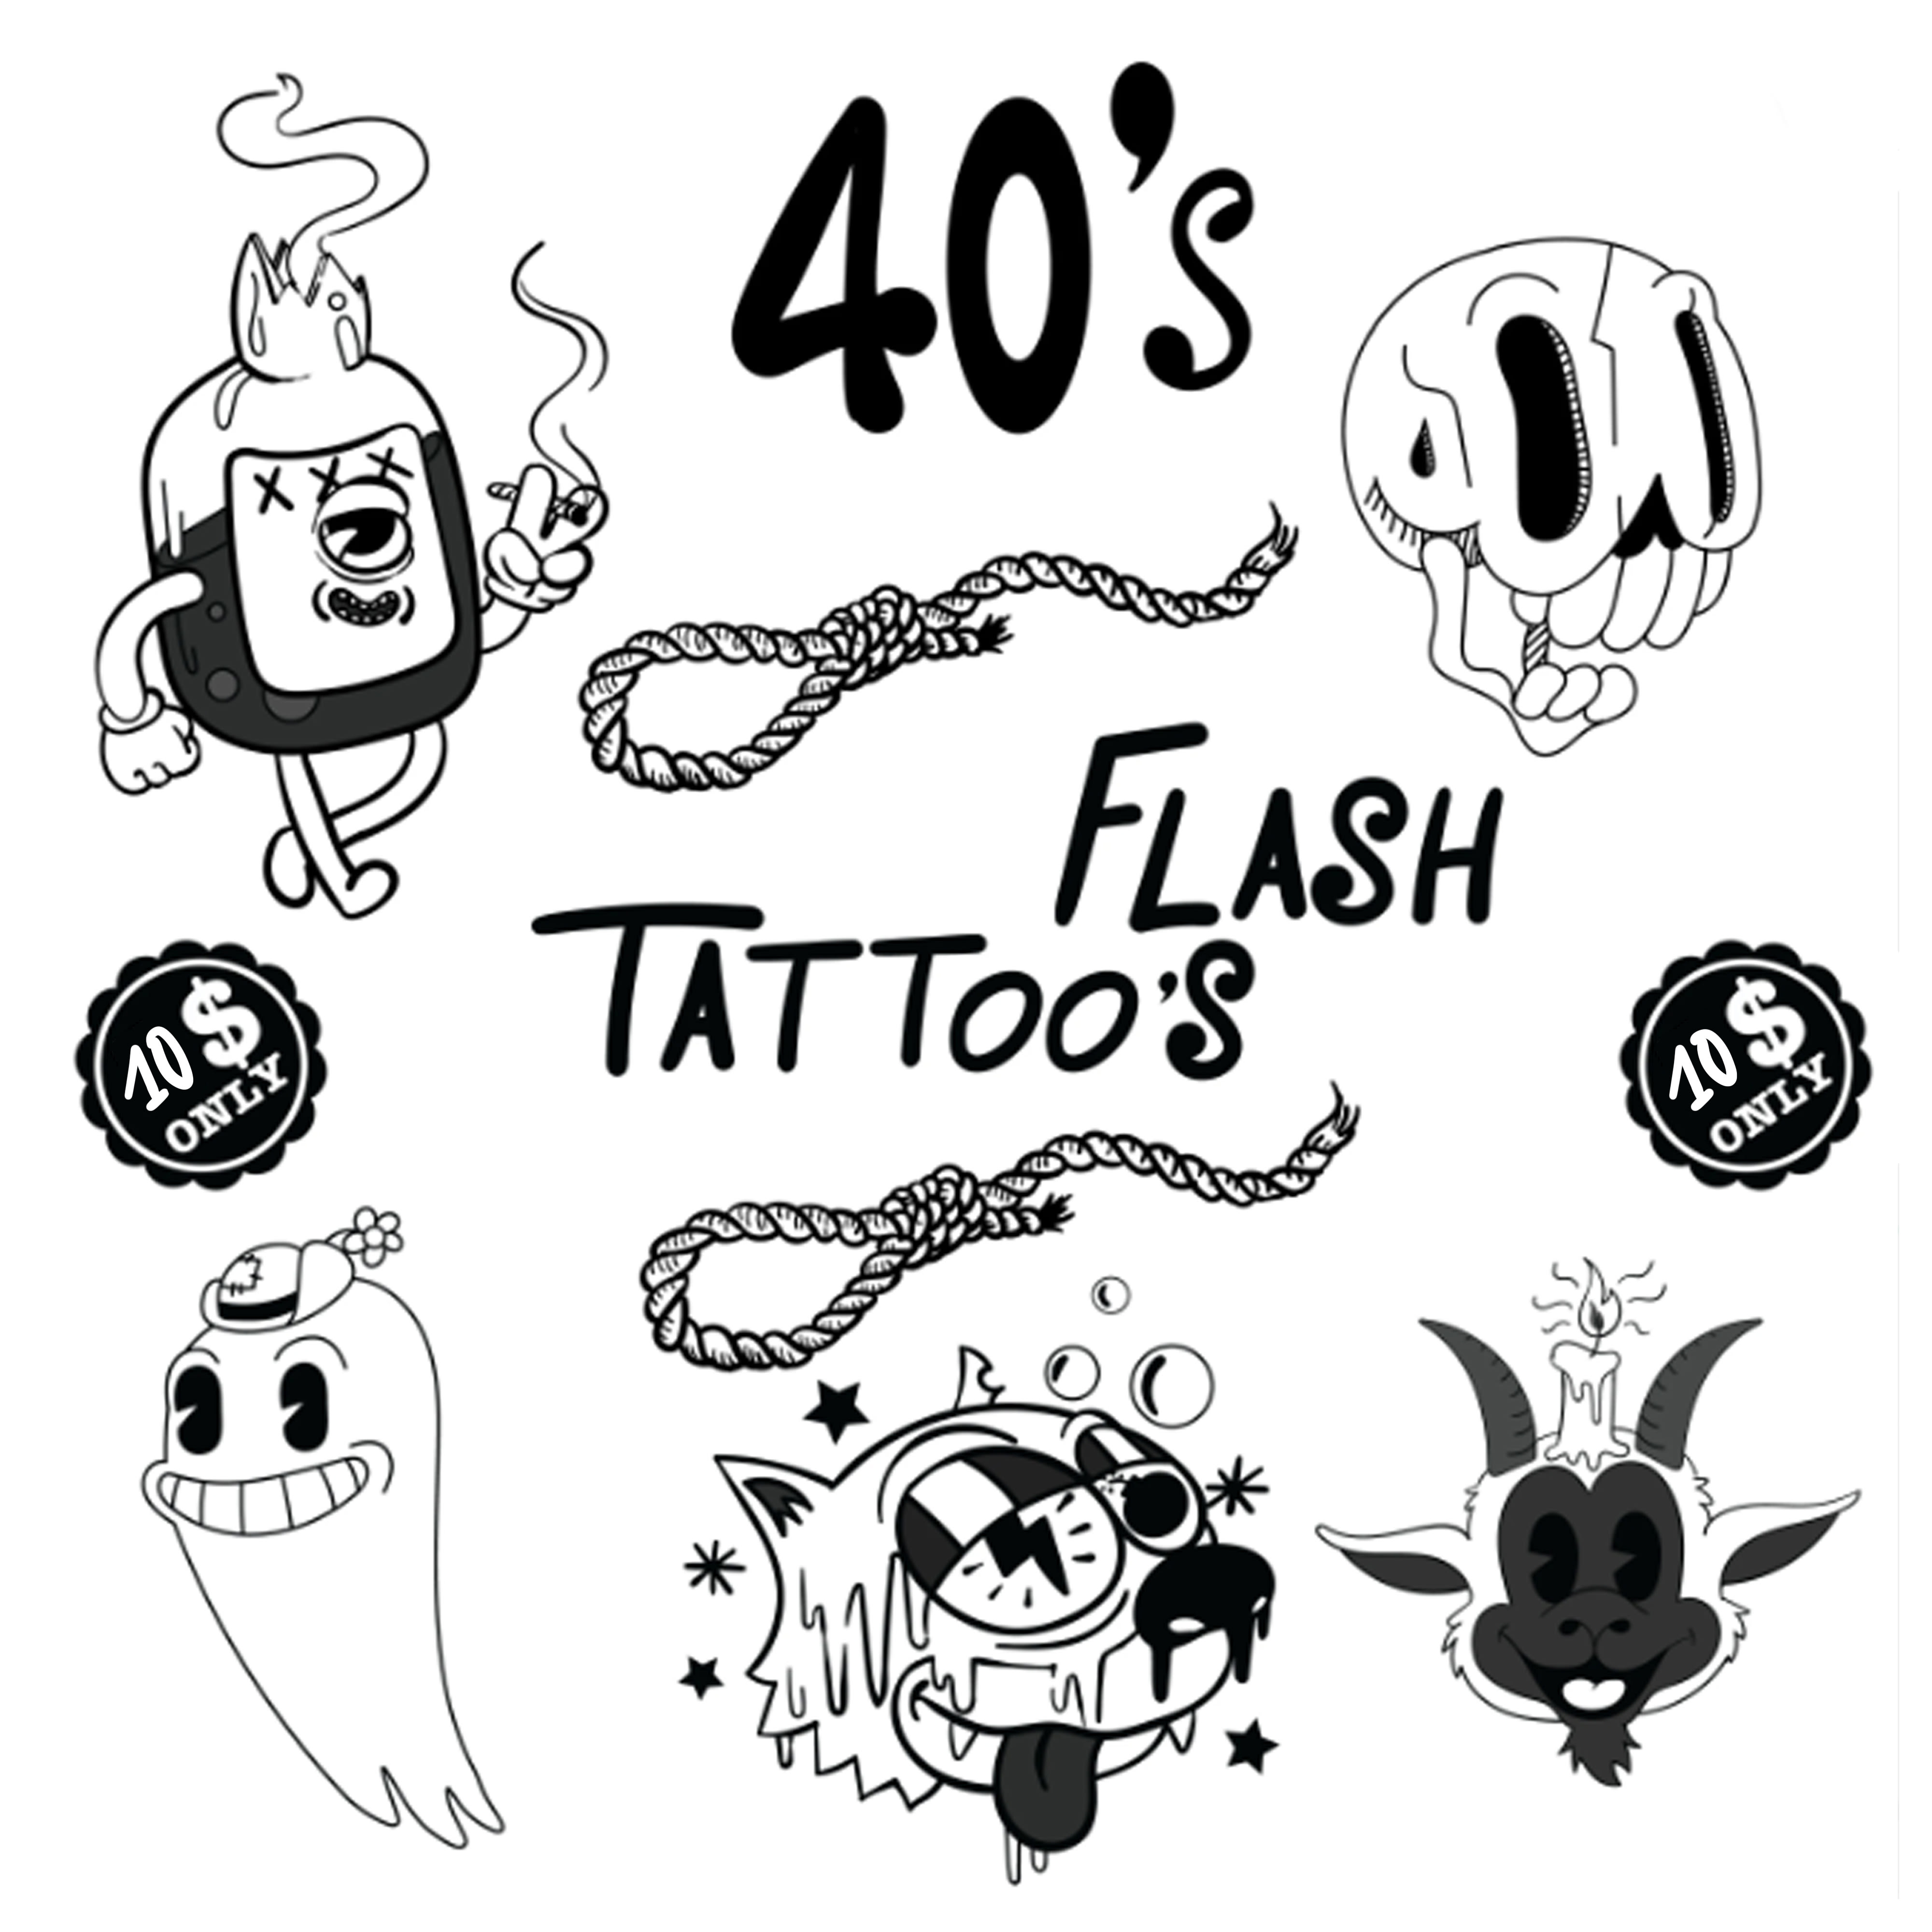 Create flash tattoos in 40s cartoon style by Hamingtone